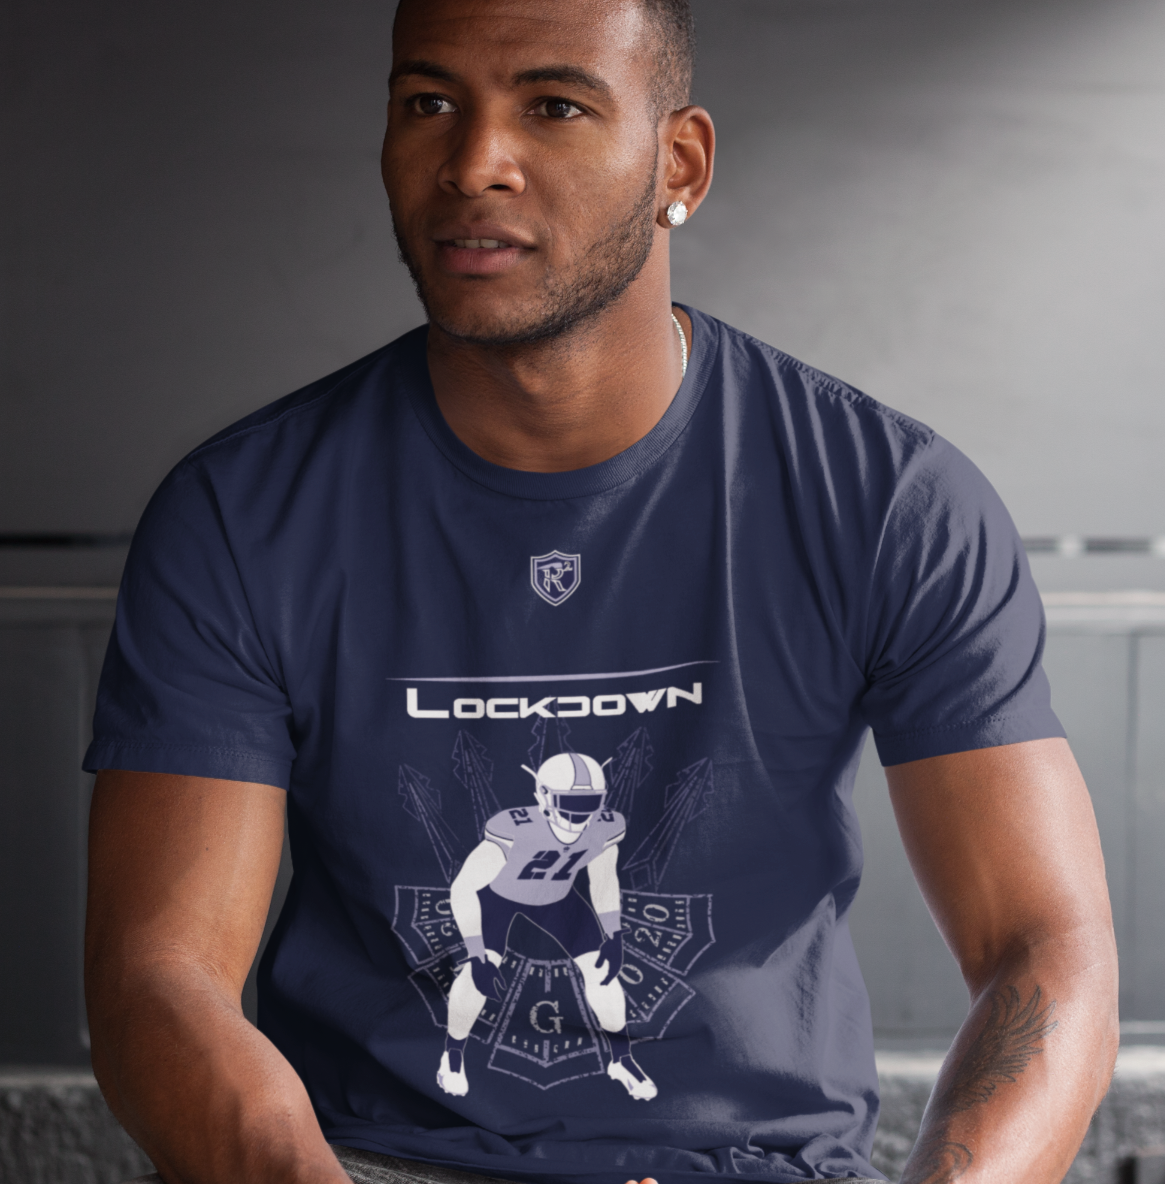 Football Athletic T Shirt, Cornerback Position, Lockdown